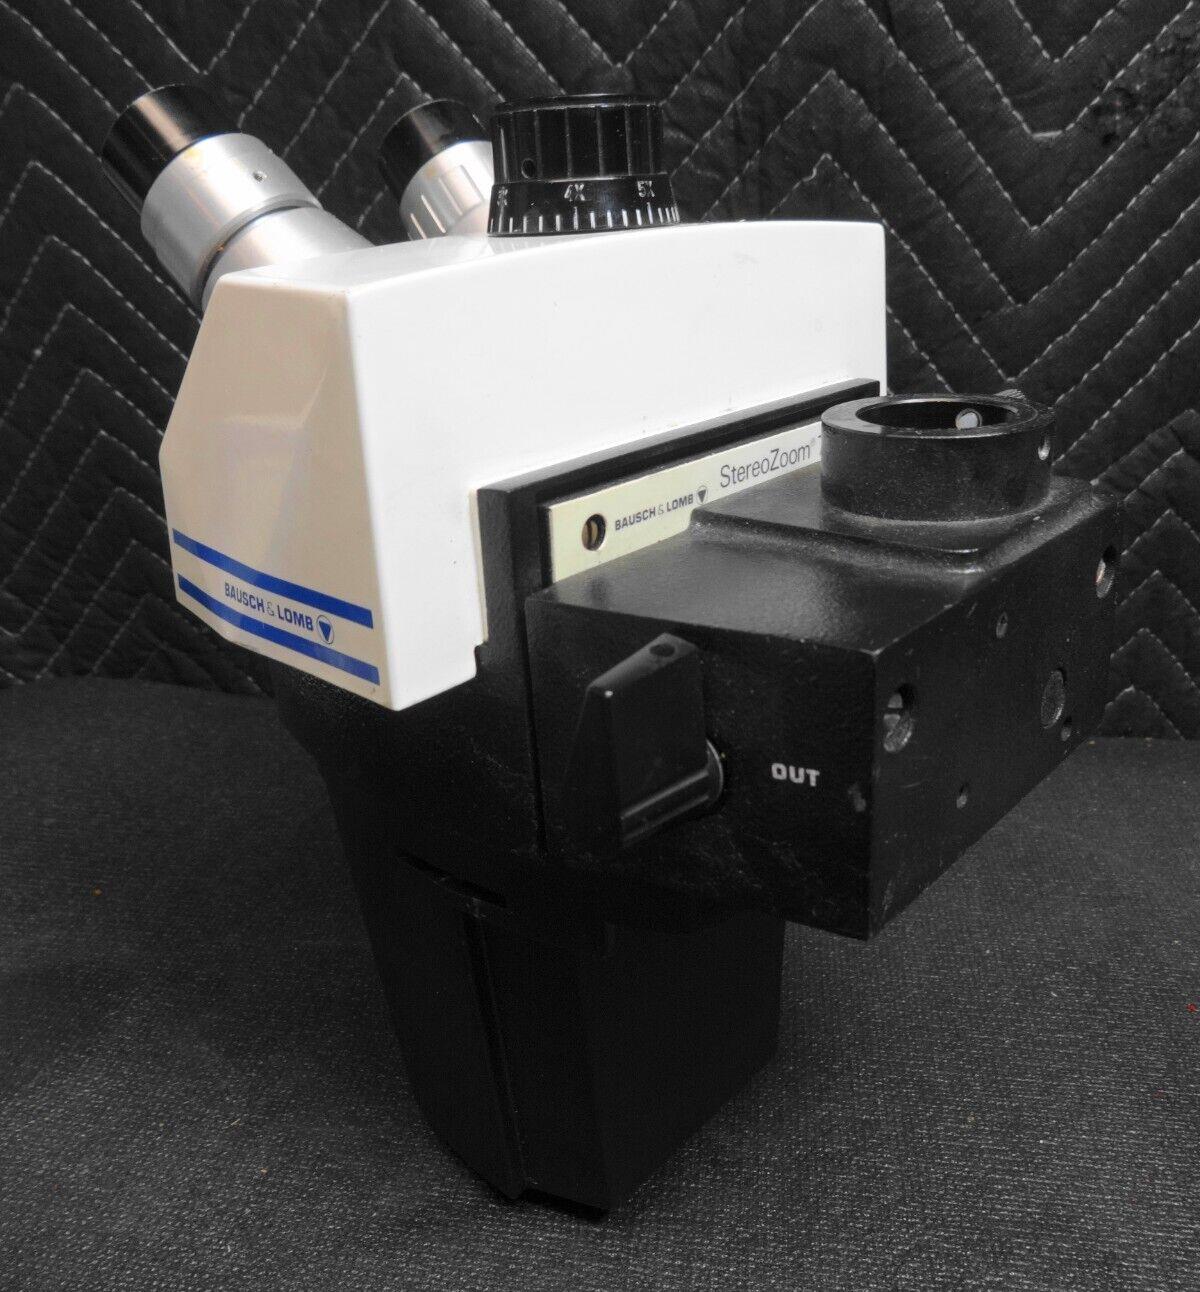 Bausch & Lomb StereoZoom 7 Microscope Head Range 1.0X-7.0X, 15X Eyepieces